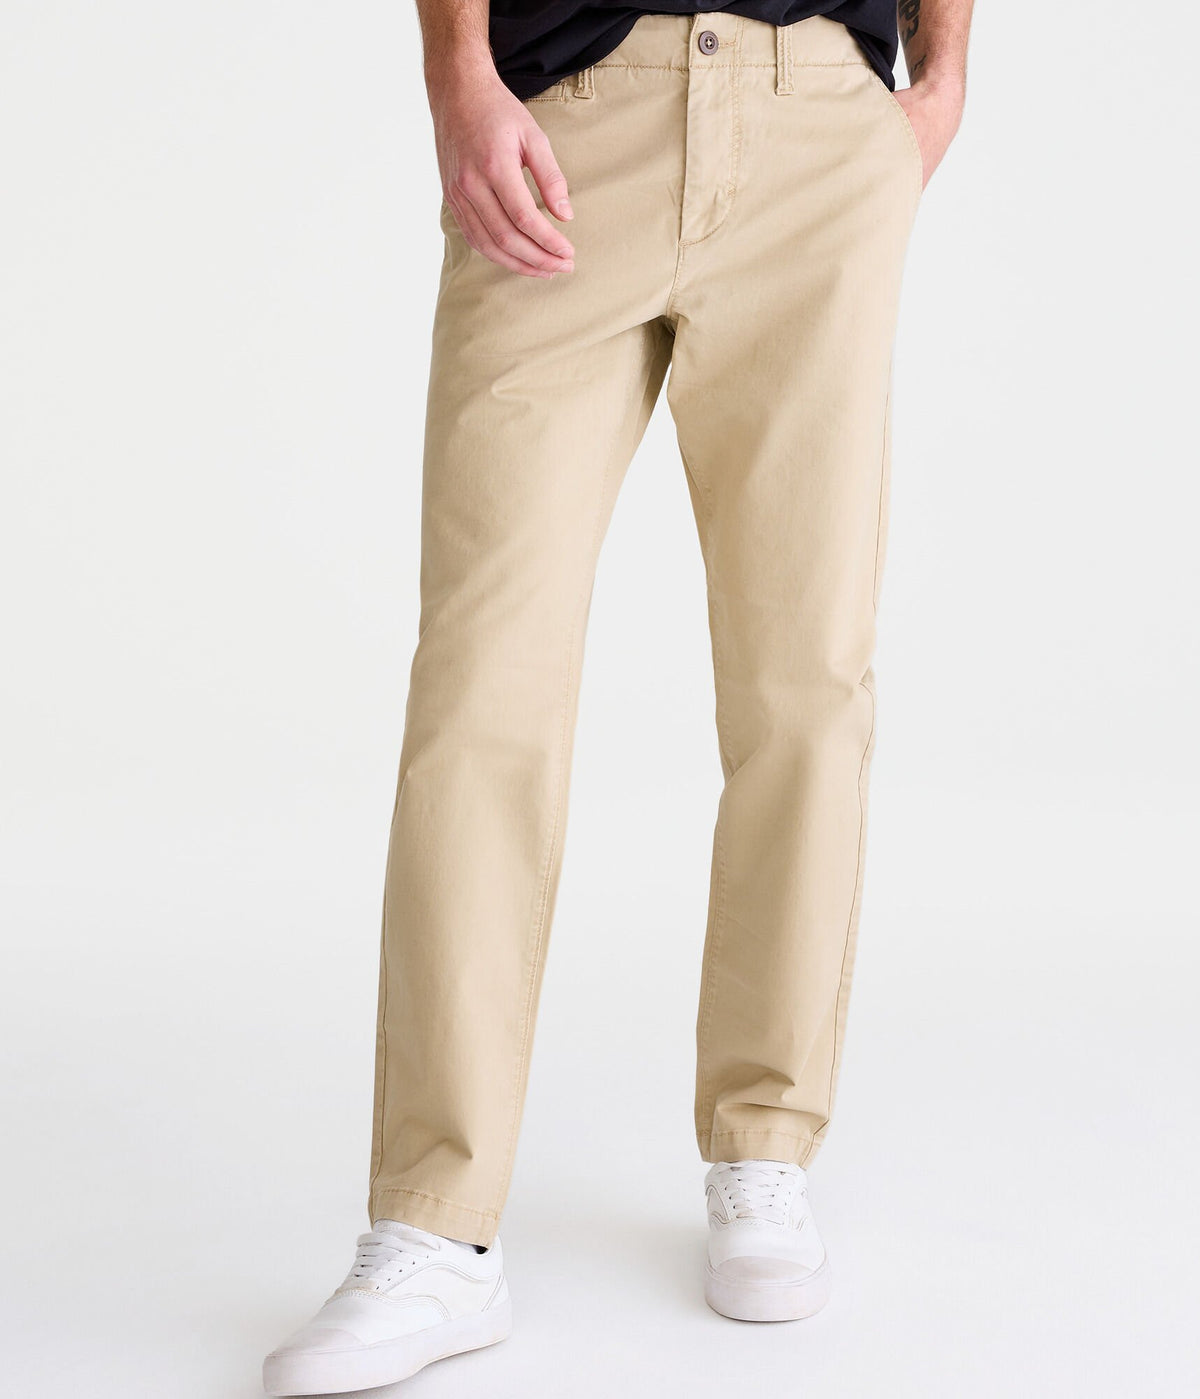 Aeropostale Mens' Athletic Fit Chinos - Tan - Size 30X30 - Cotton - Teen Fashion & Clothing Hazelnut